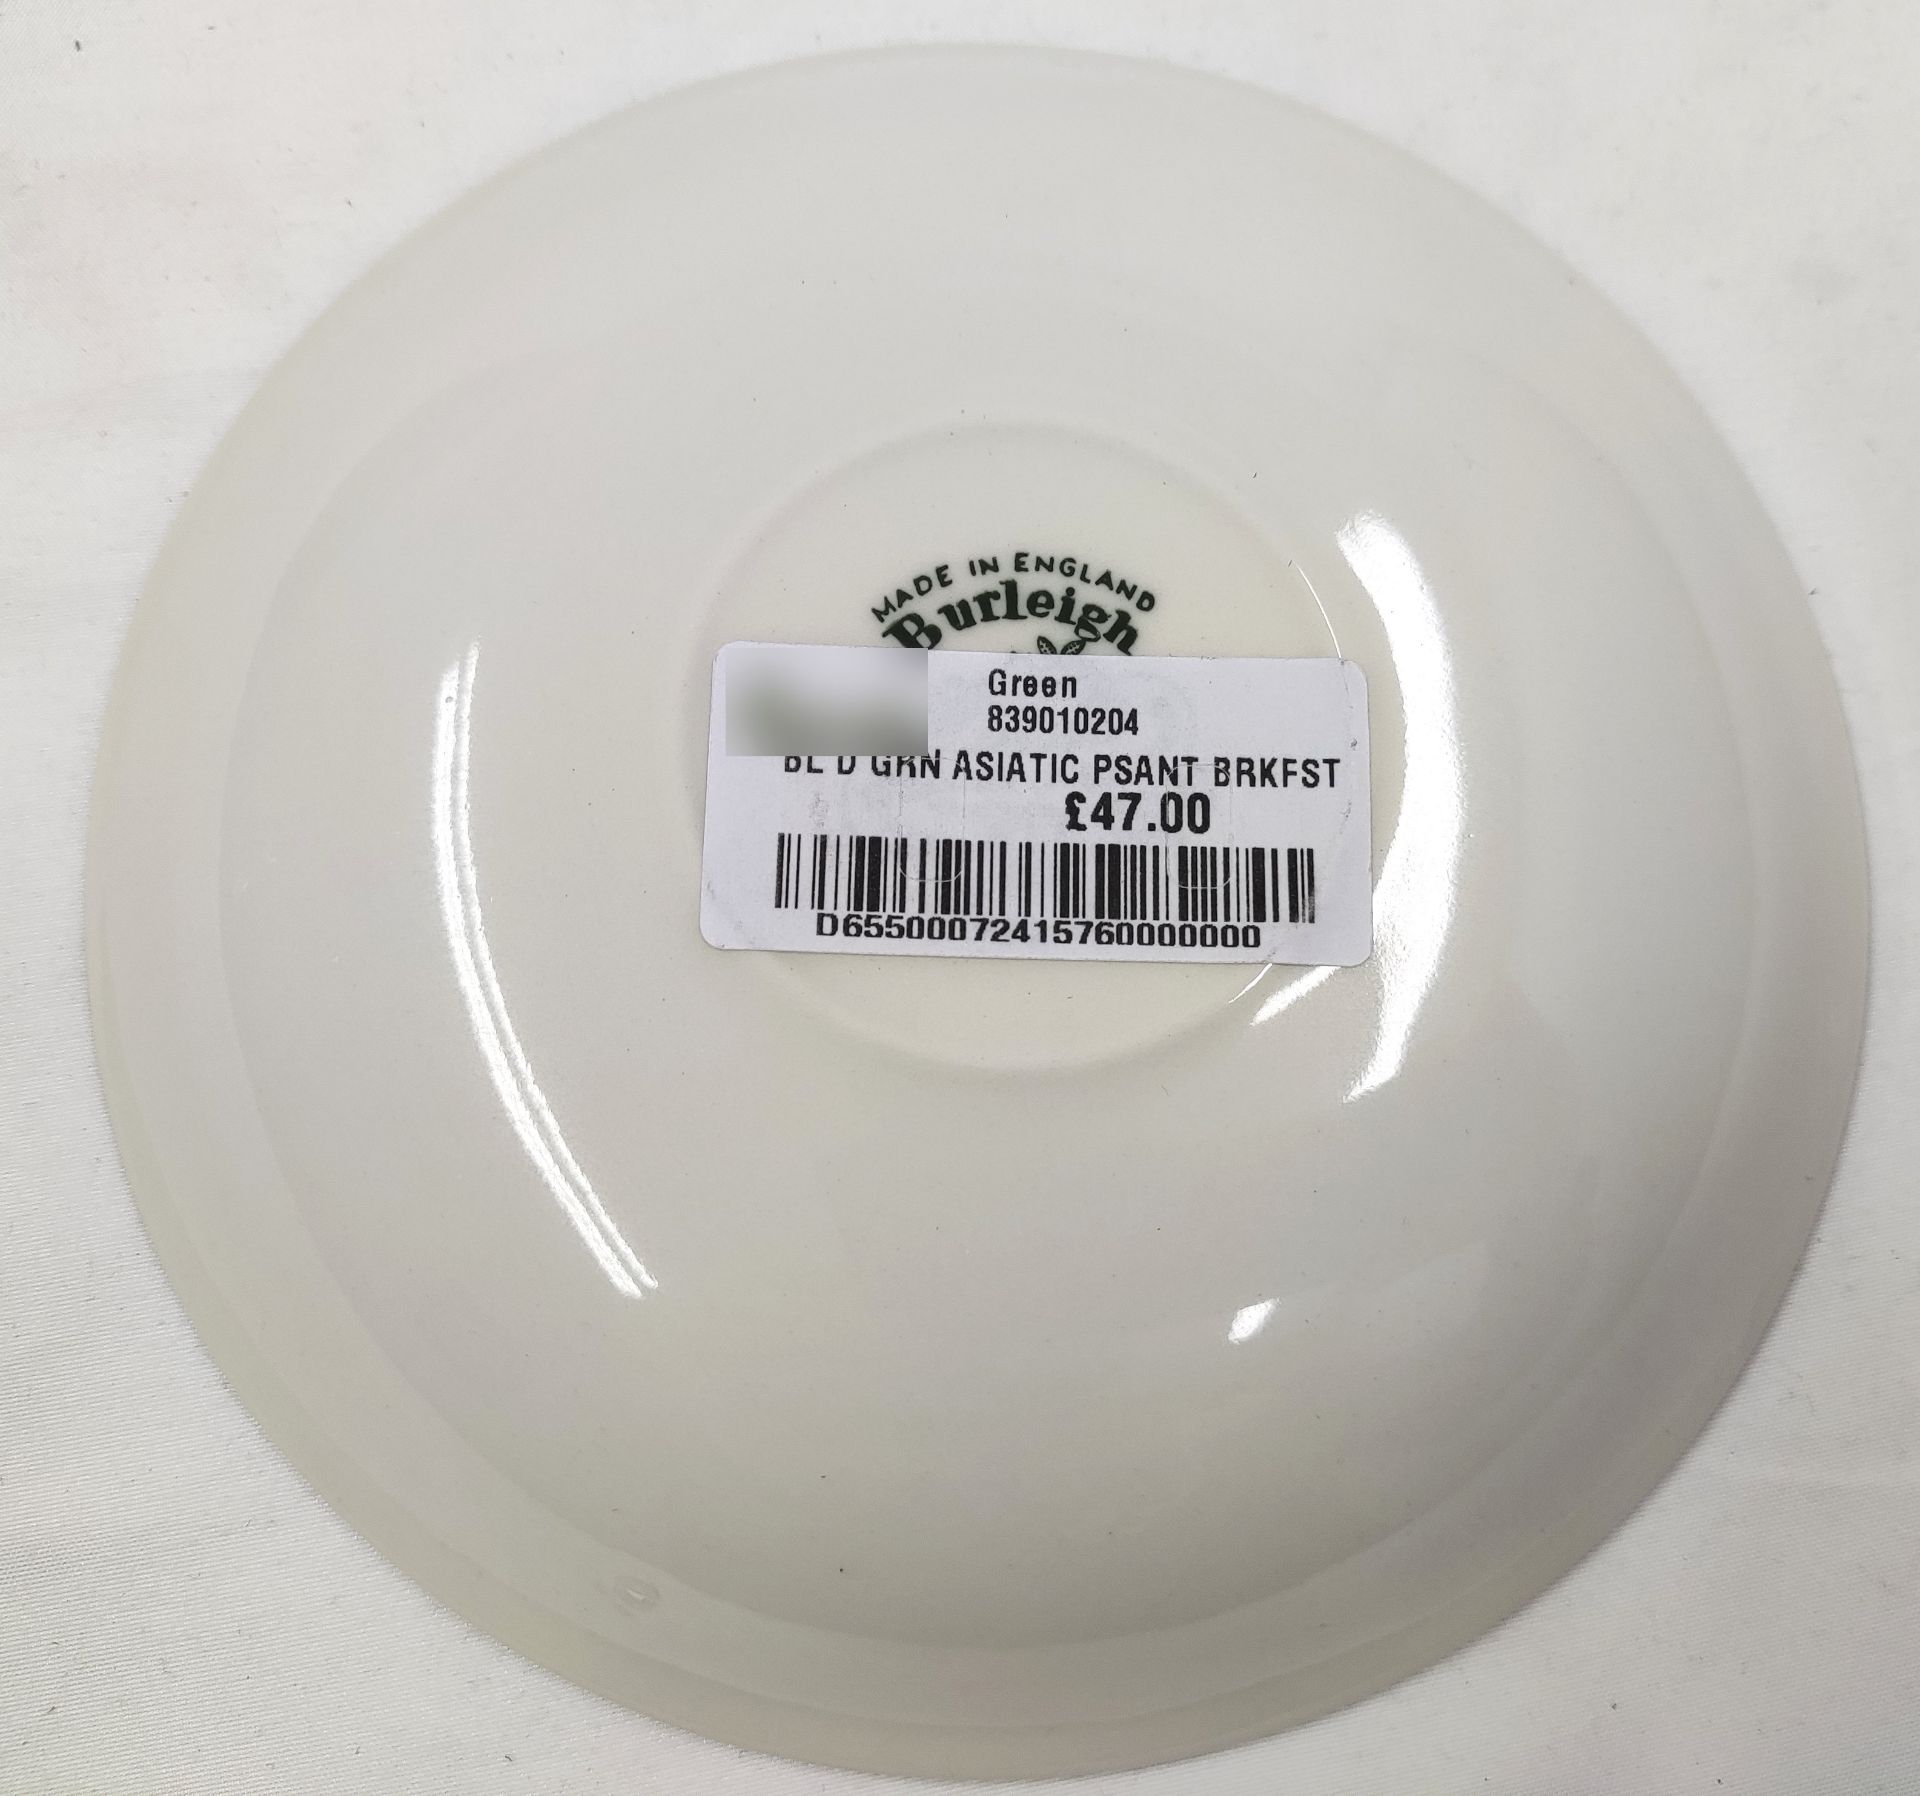 1 x BURLEIGH Dark Green Asiatic Pheasant Breakfast Saucer - New - RRP £47 - Ref: 7241576/HOC194/ - Image 3 of 6